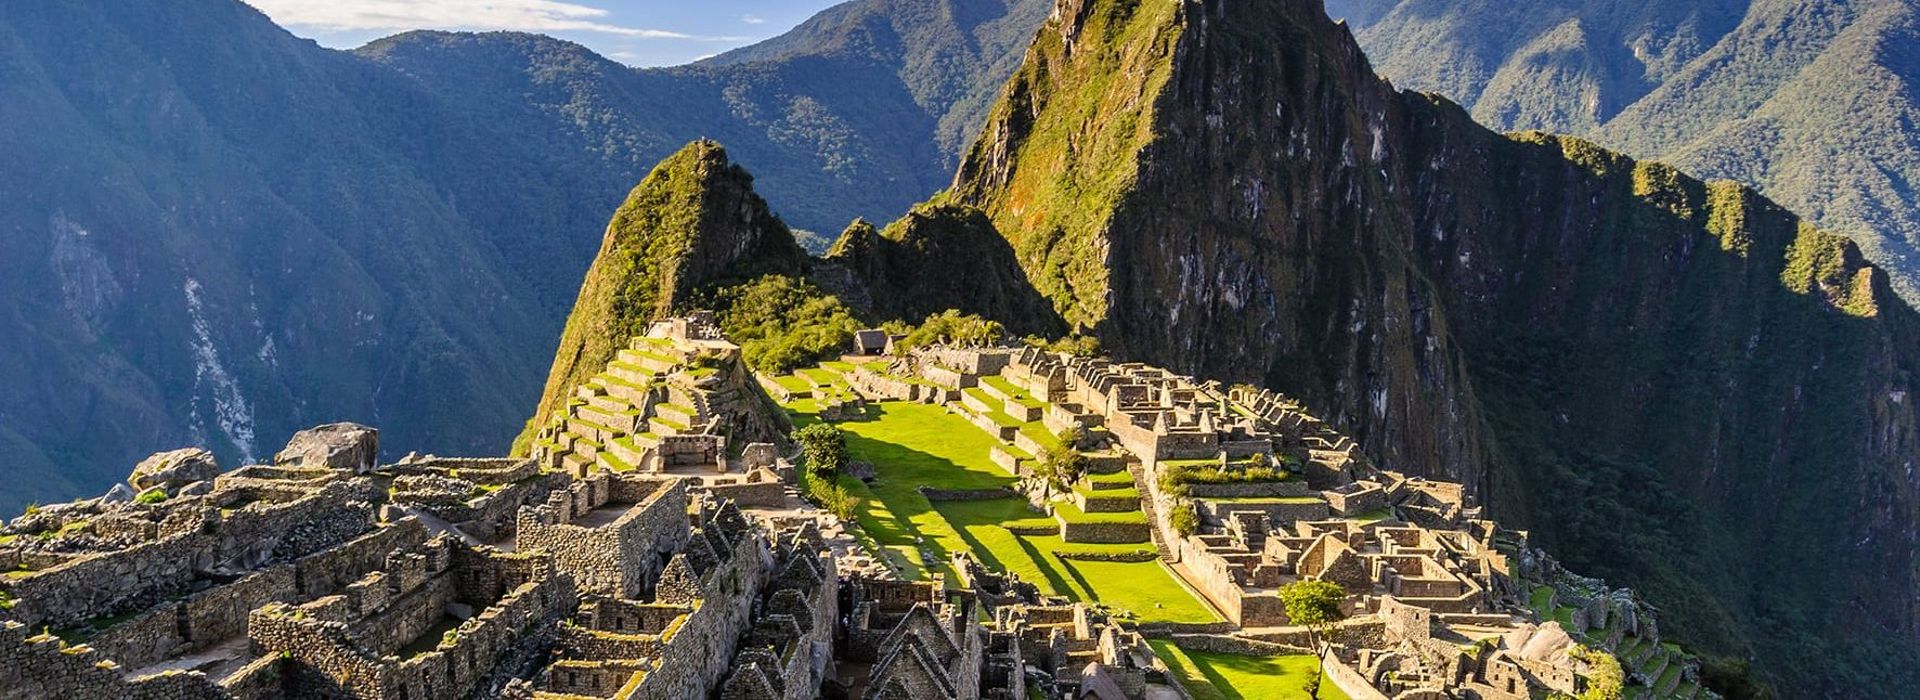 active-gourmet-holidays-peru-trekking-cooking-Machu-Picchu-stock.jpg